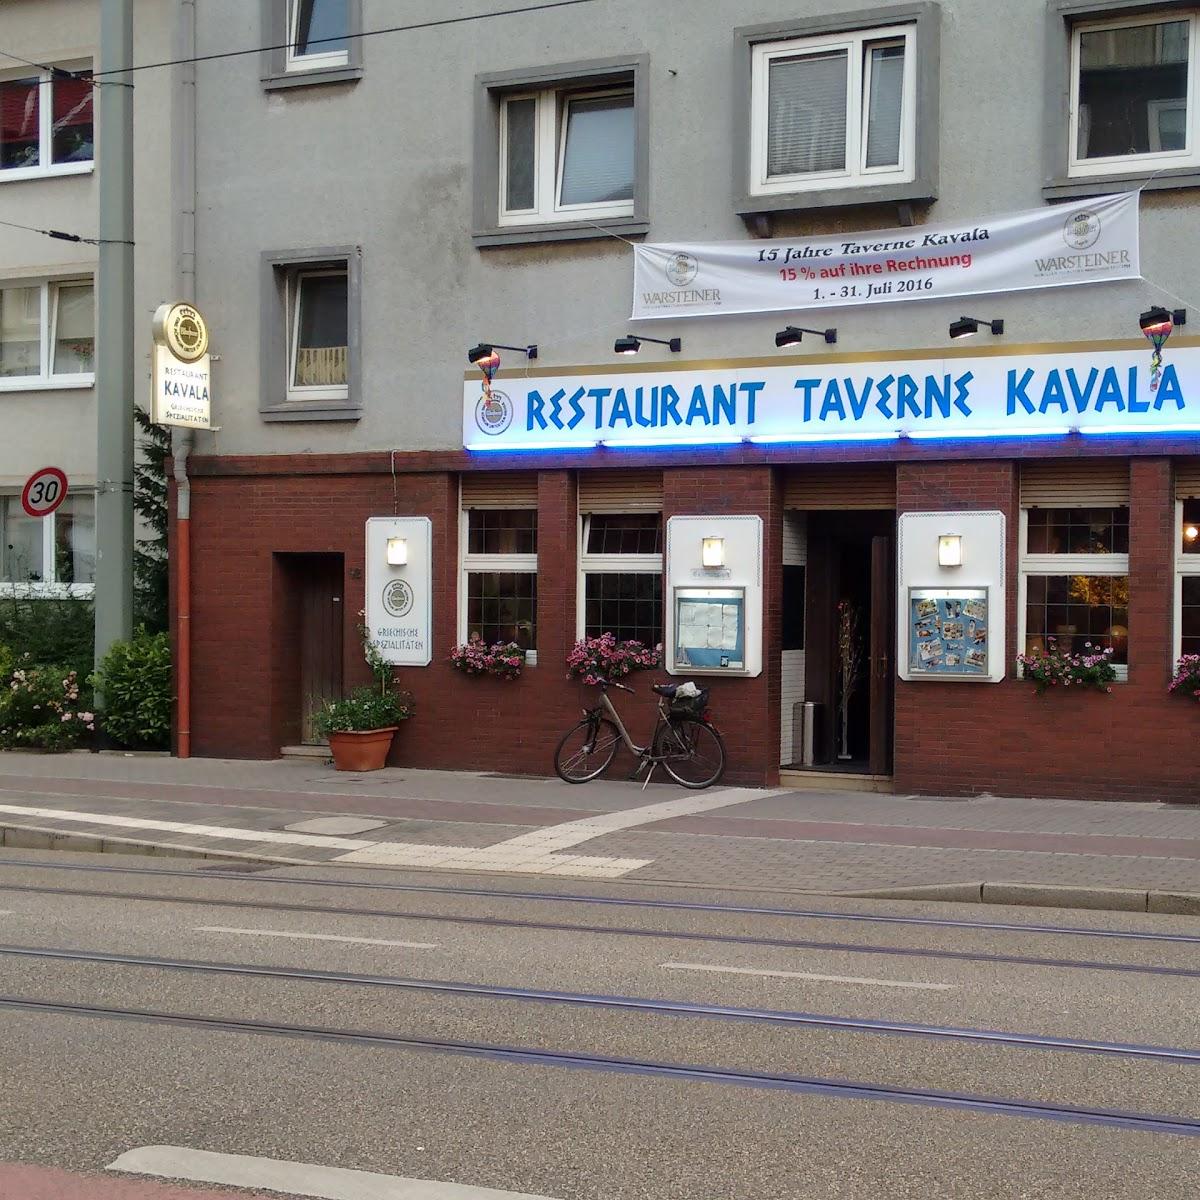 Restaurant "Taverne Kavala" in Herne